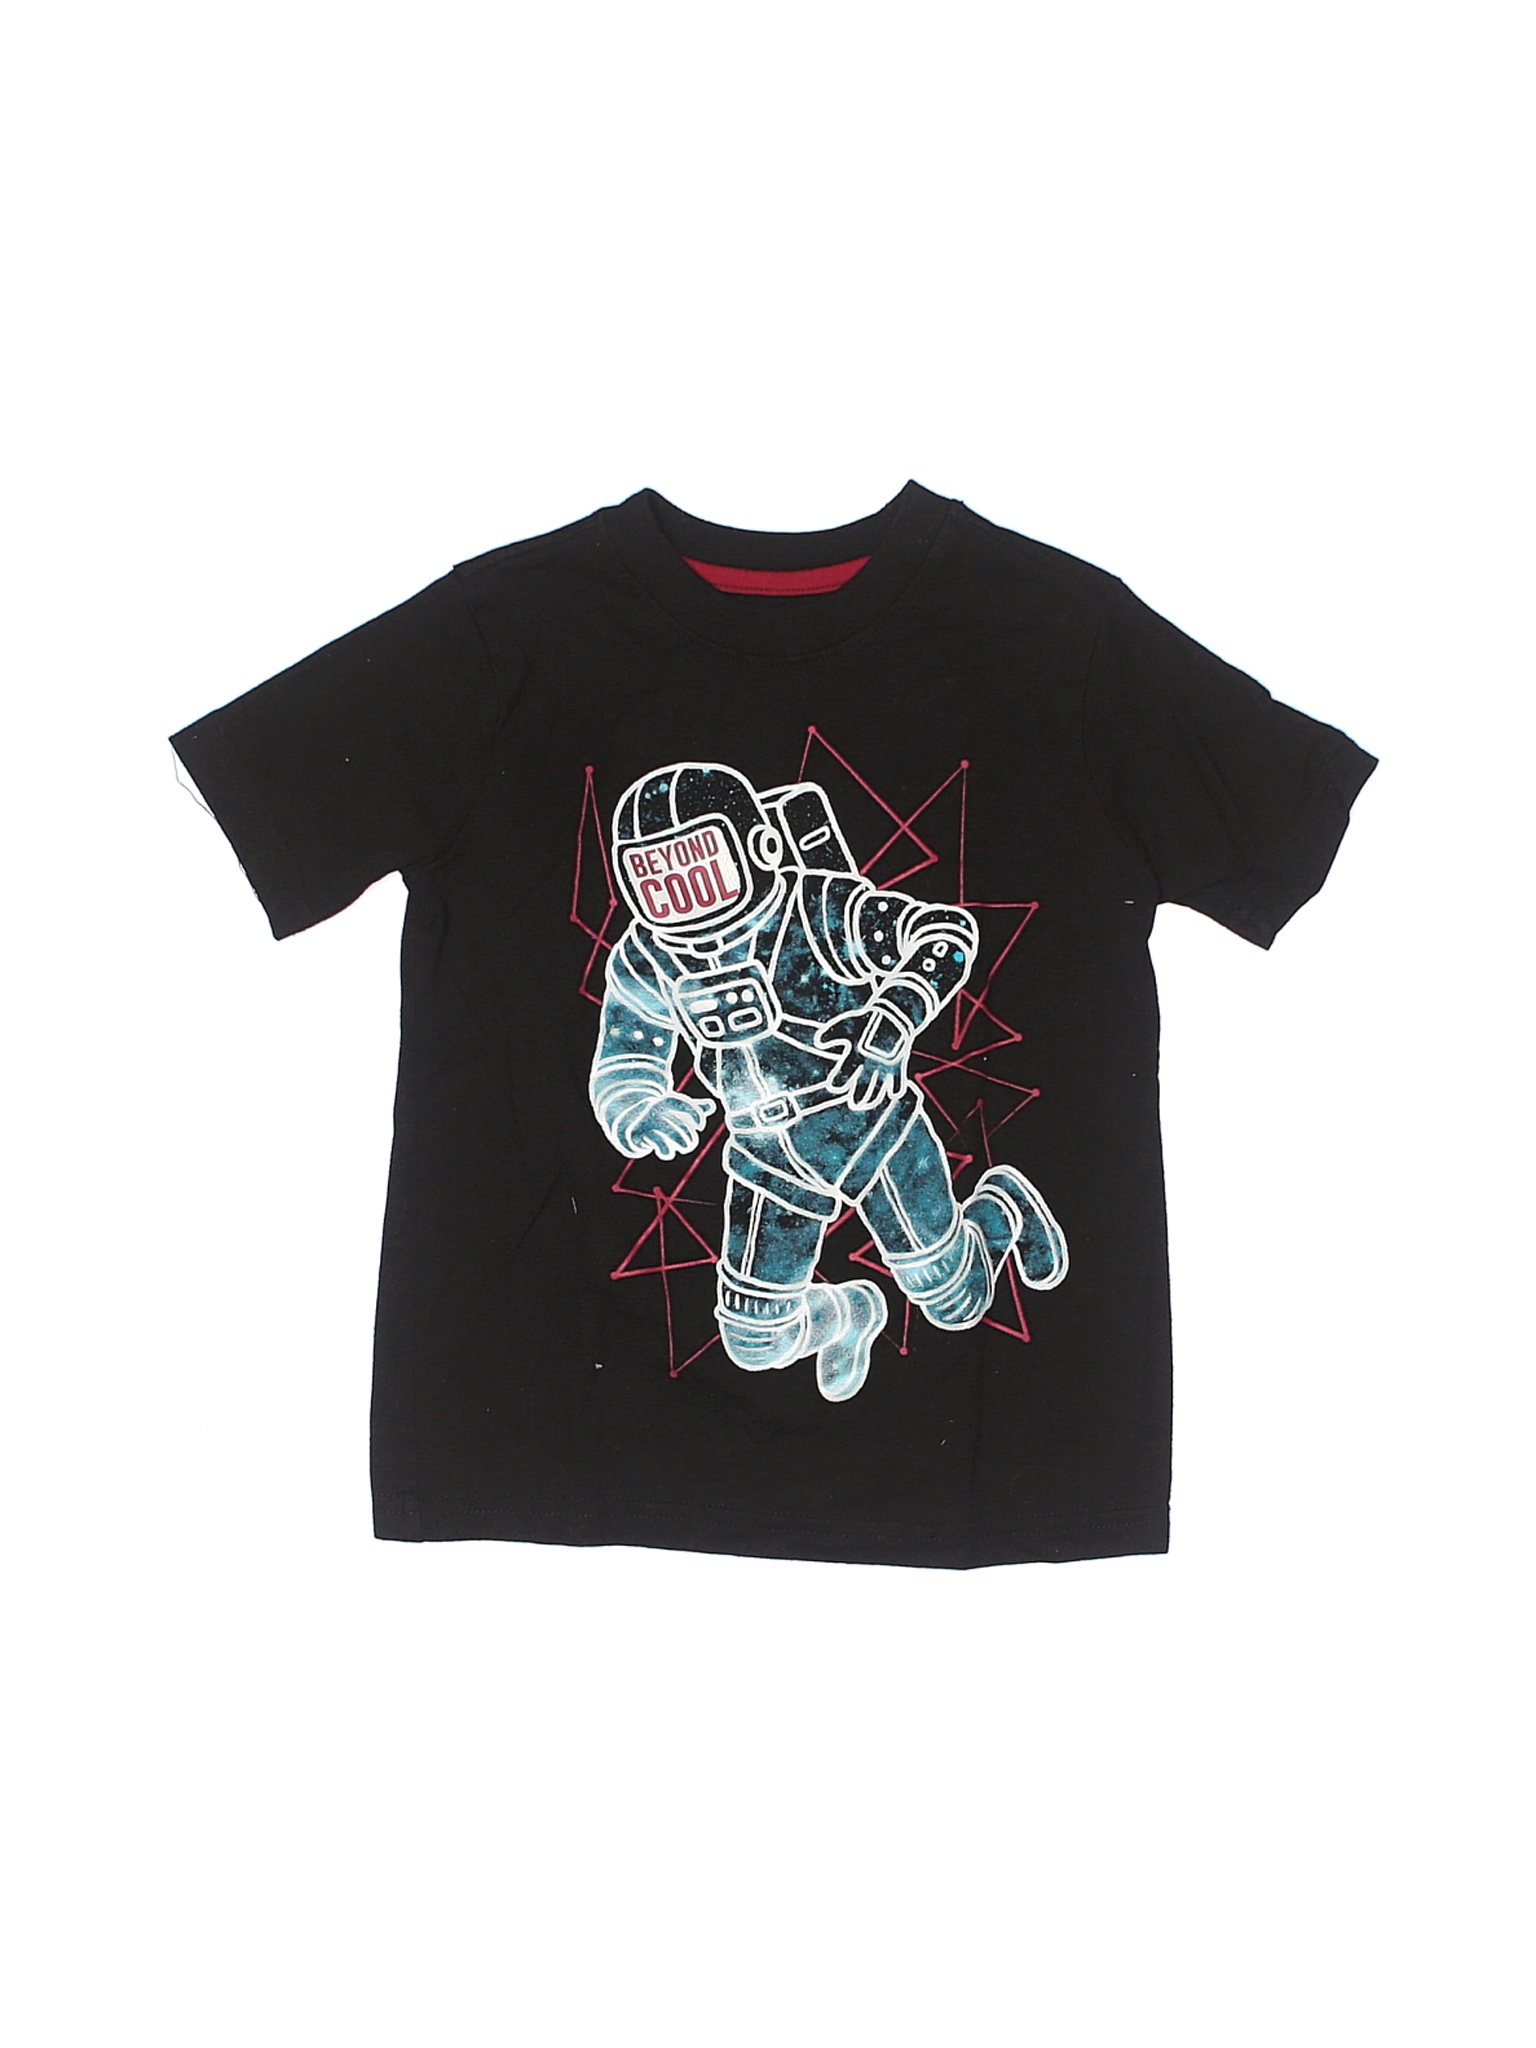 Wonder Nation Boys Black Short Sleeve T-Shirt X-Small kids | eBay